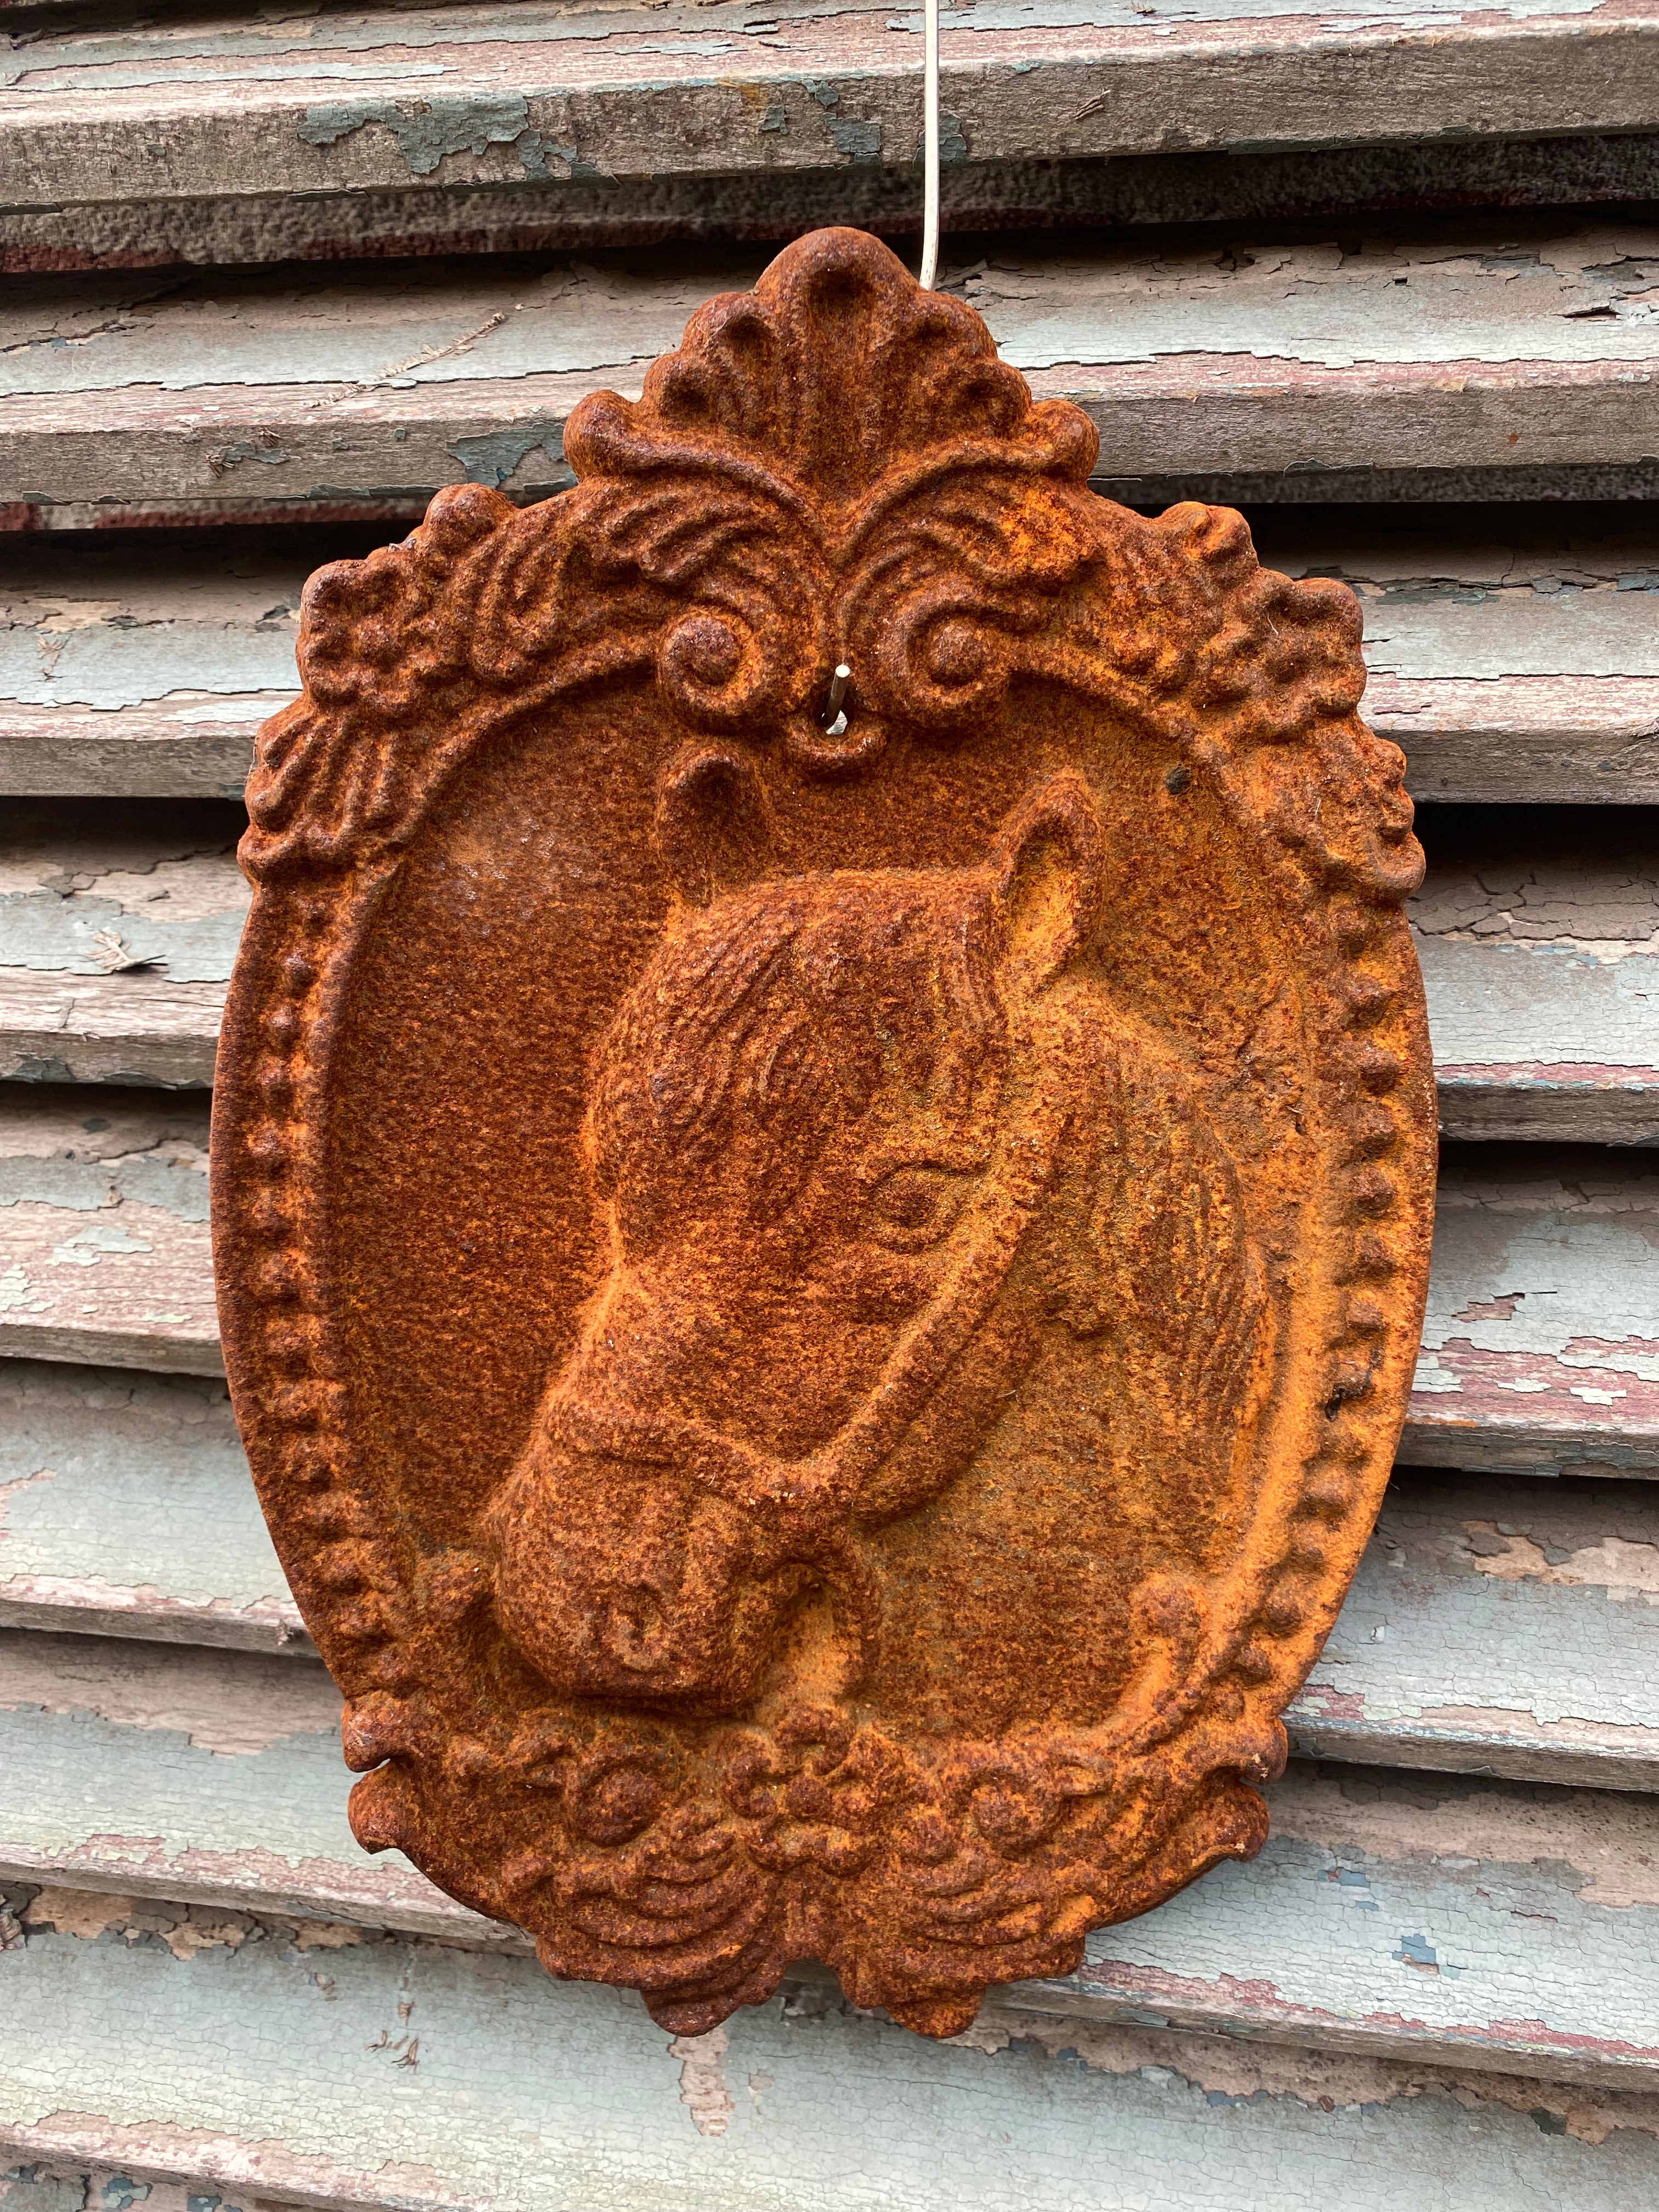 Wand plateau plaatje paard gietijzer - Brocante bij Ingie